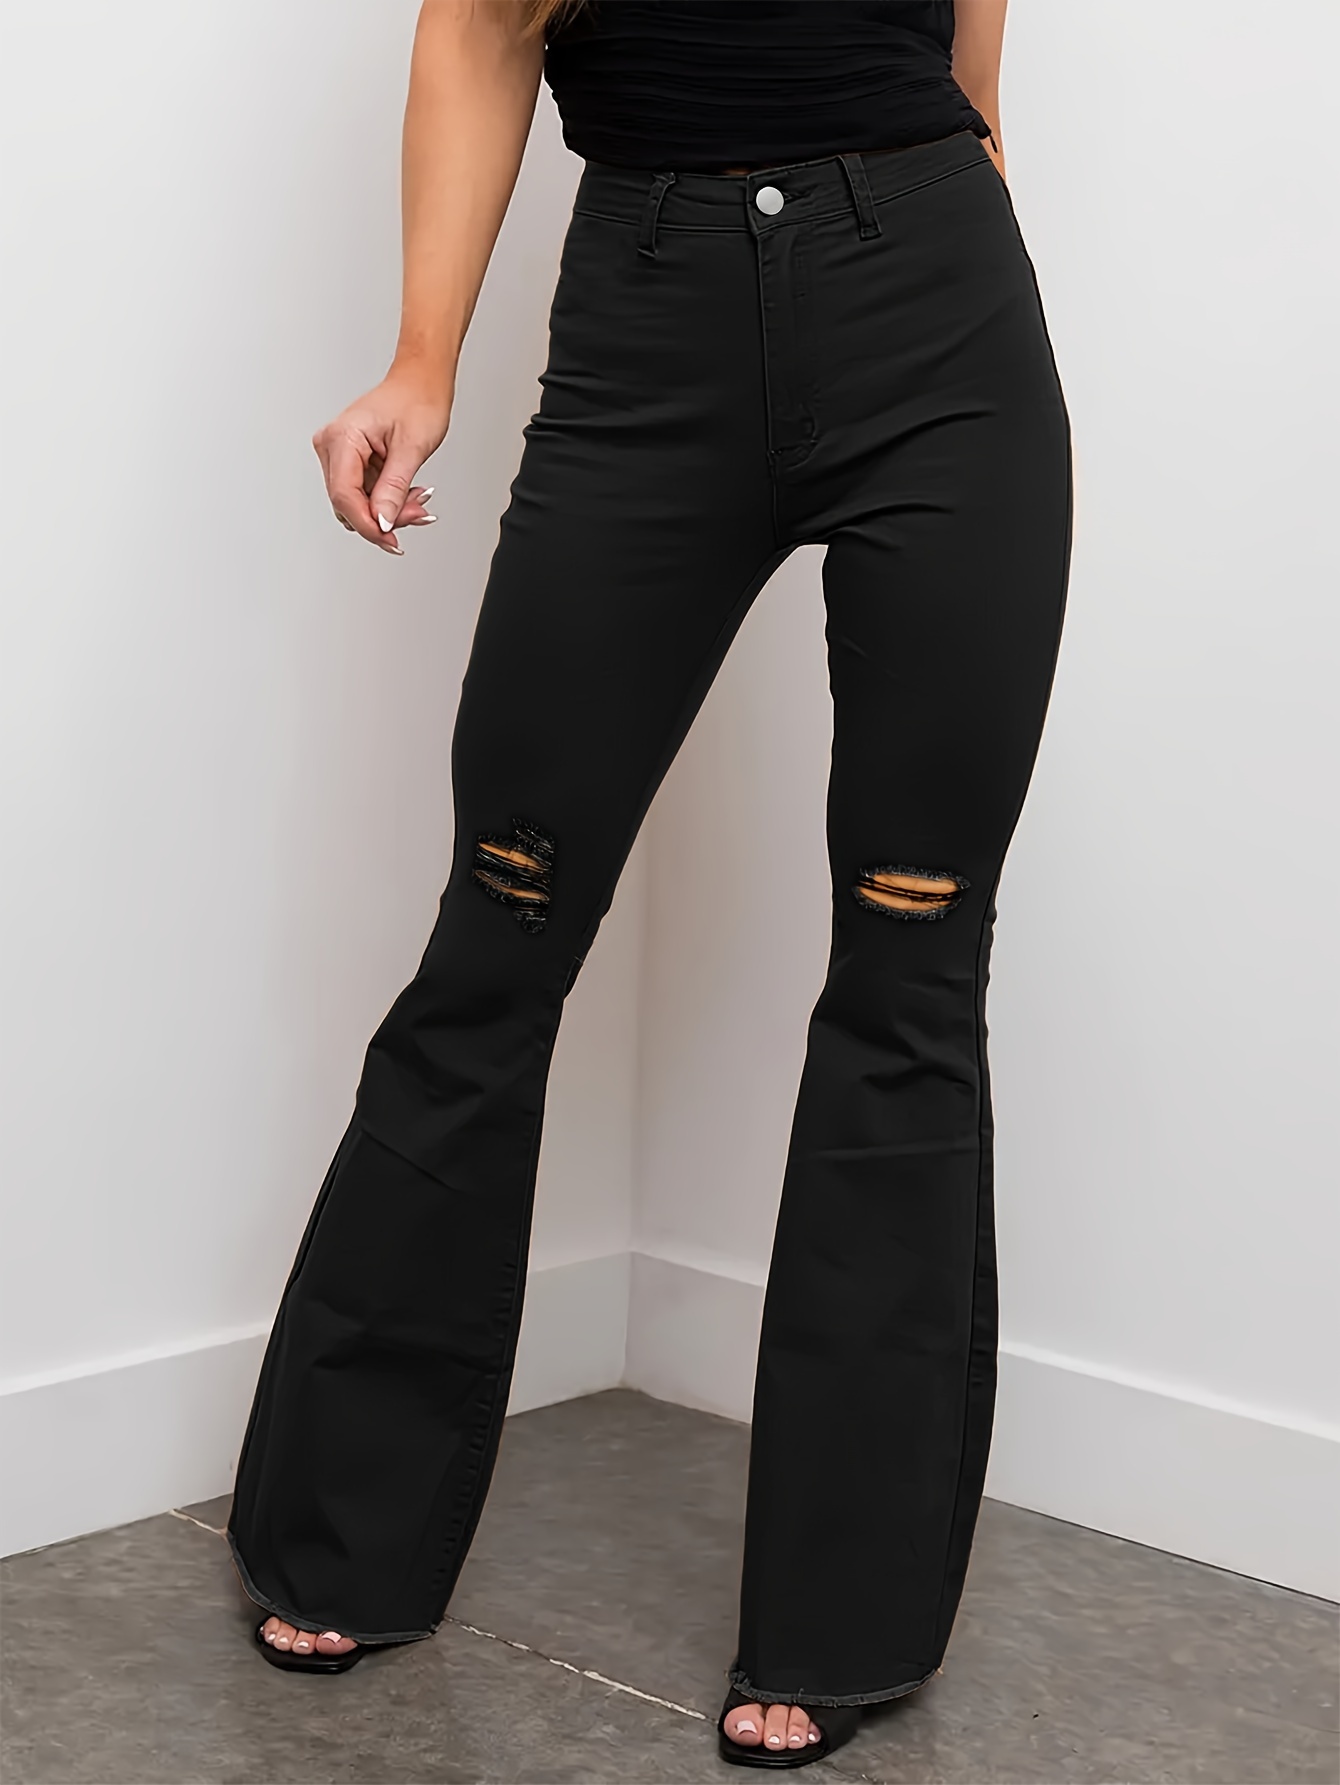 Black Ripped High Waist Flared Jeans, High * Bell Bottom Boot-Cut  Distressed Denim Pants, Women's Denim Jeans & Clothing